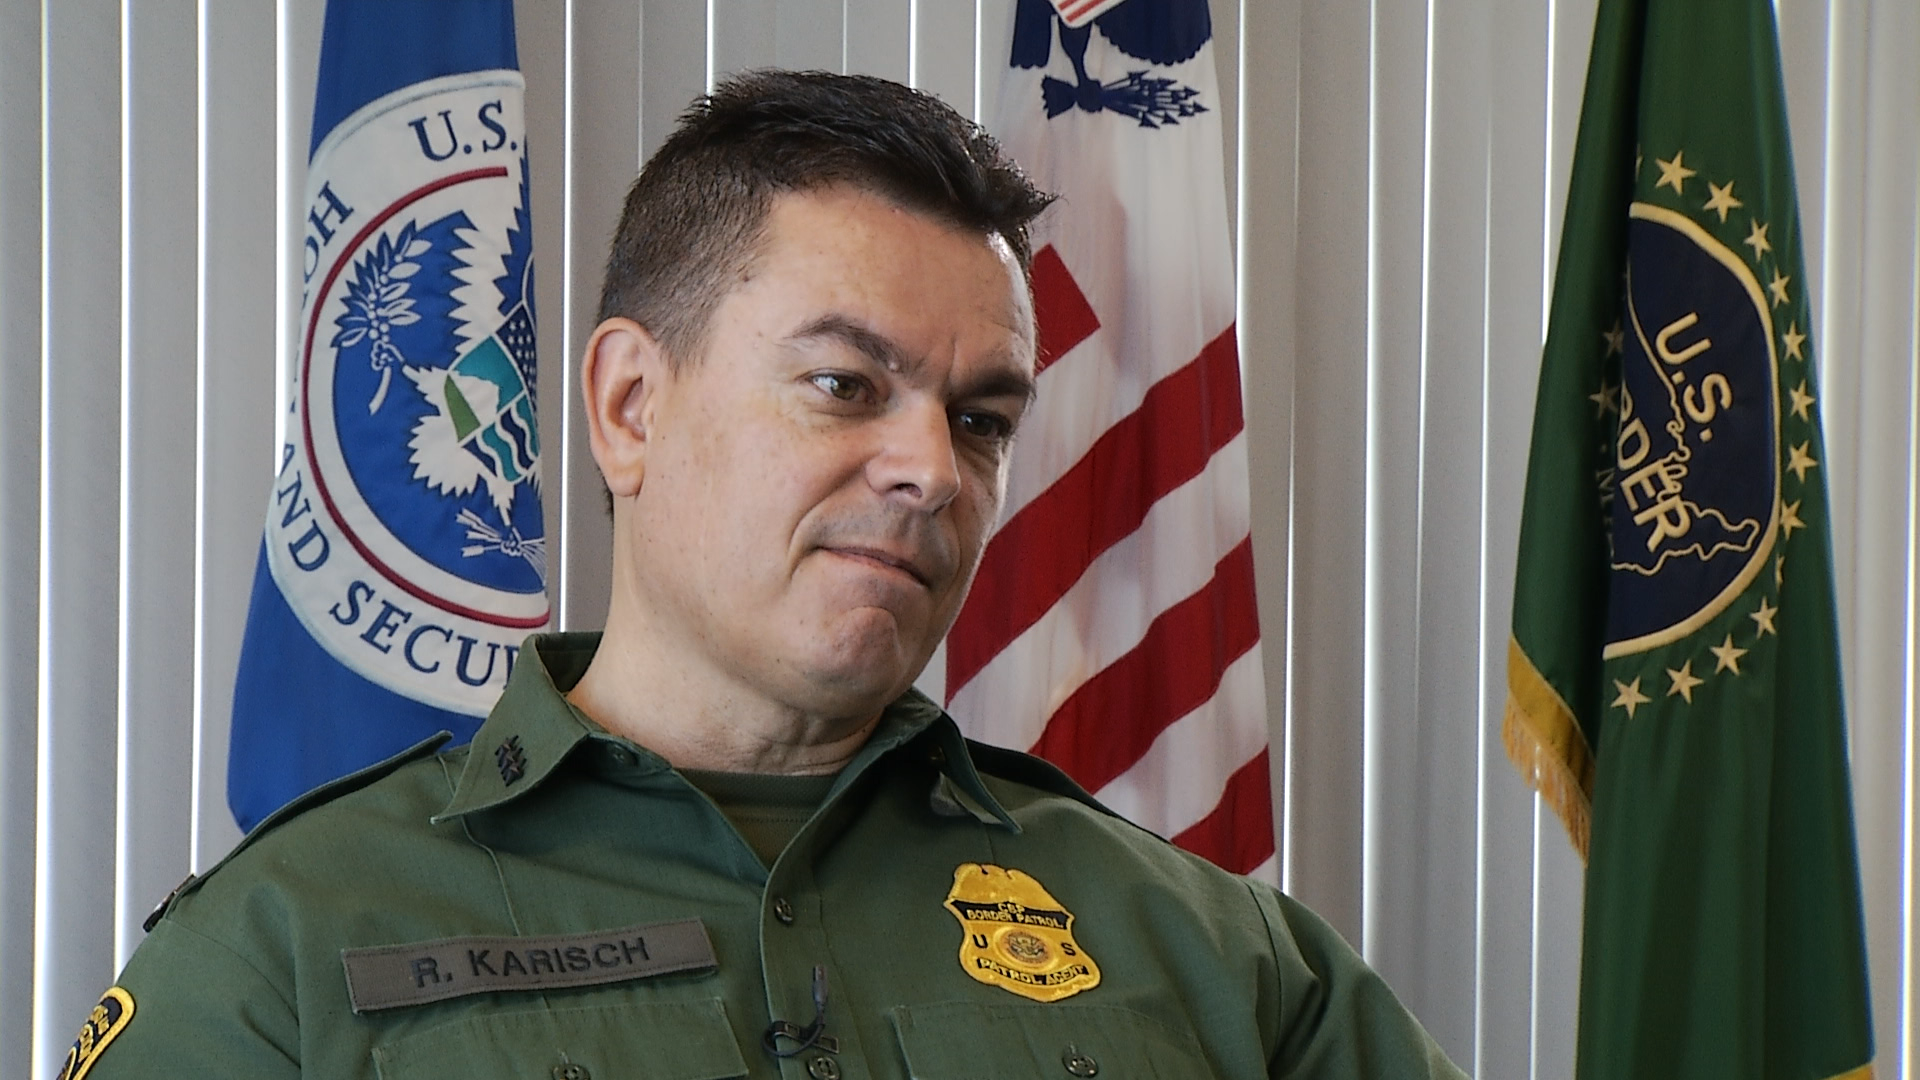 Border Patrol Tucson Sector Chief Patrol Agent Rodolfo Karisch.